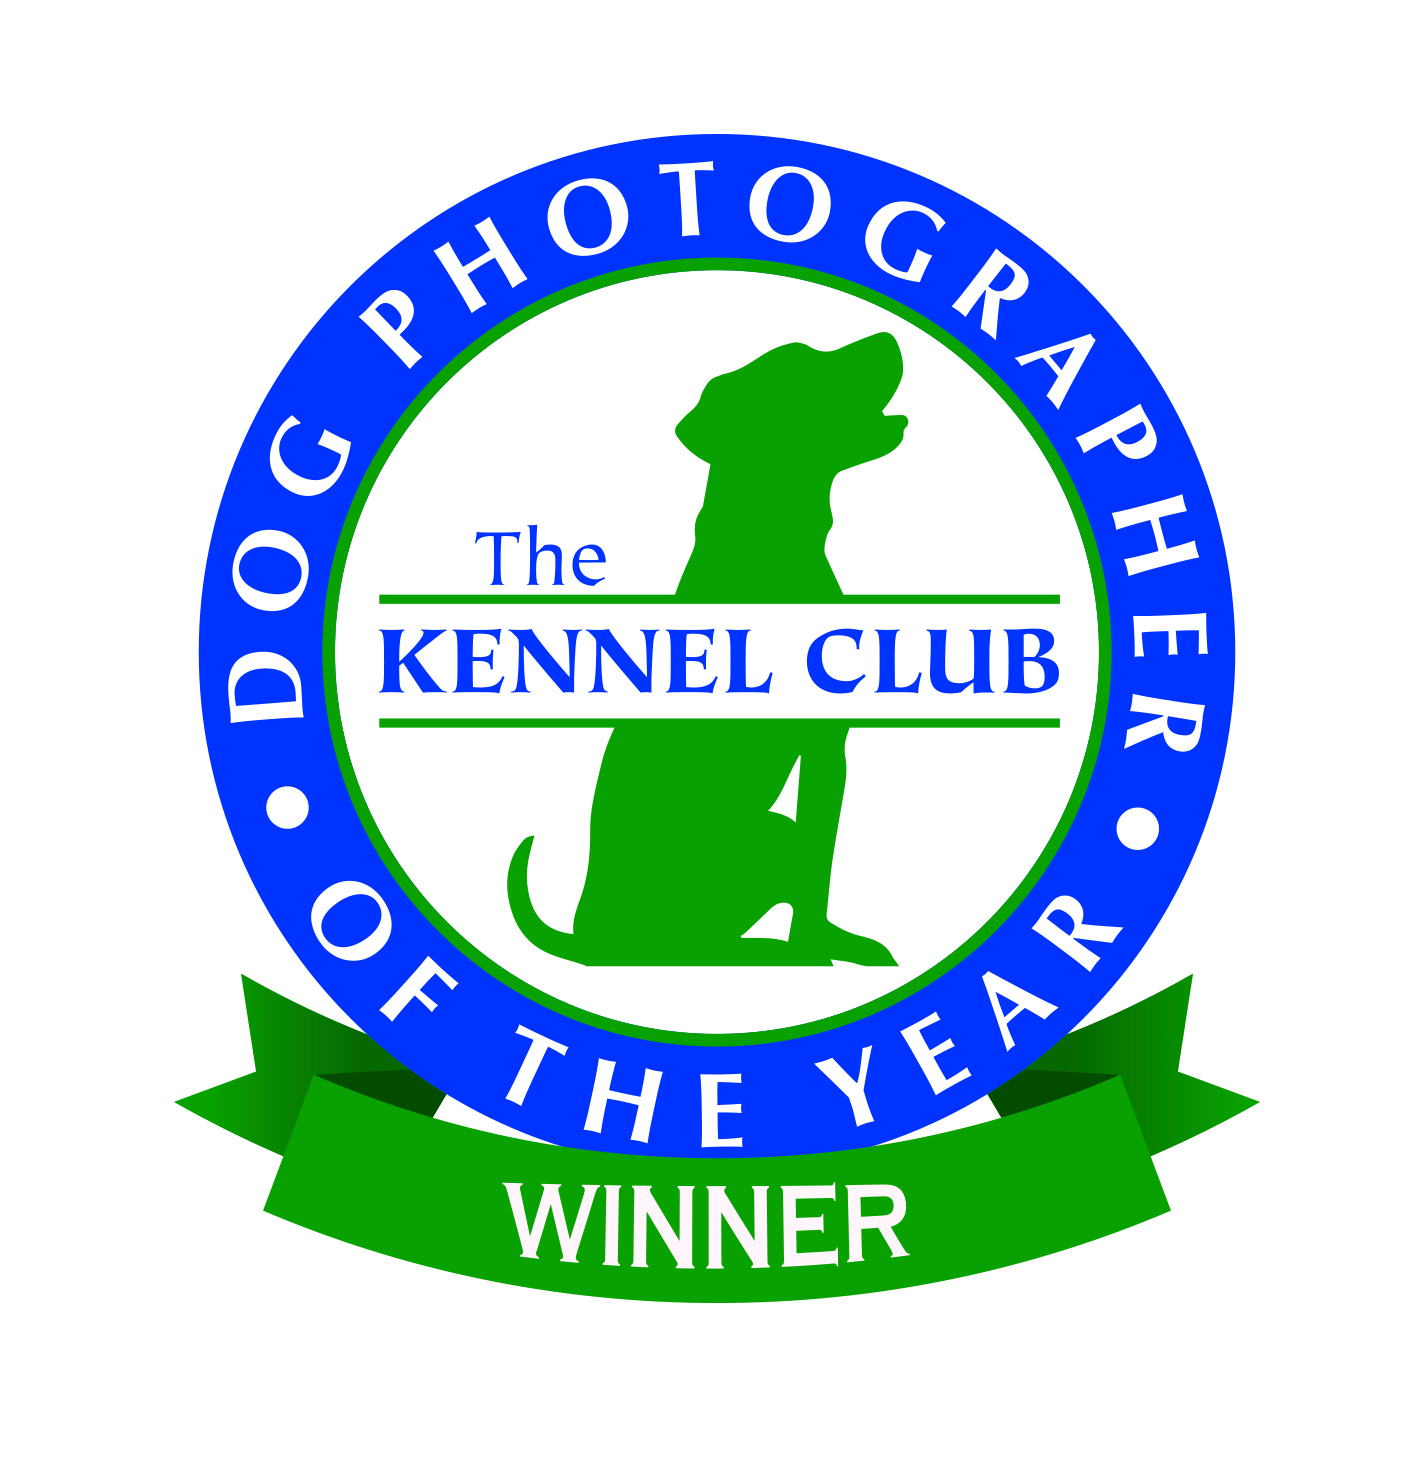 DPOTY_Official Winner Logo_The Kennel Club©.jpg